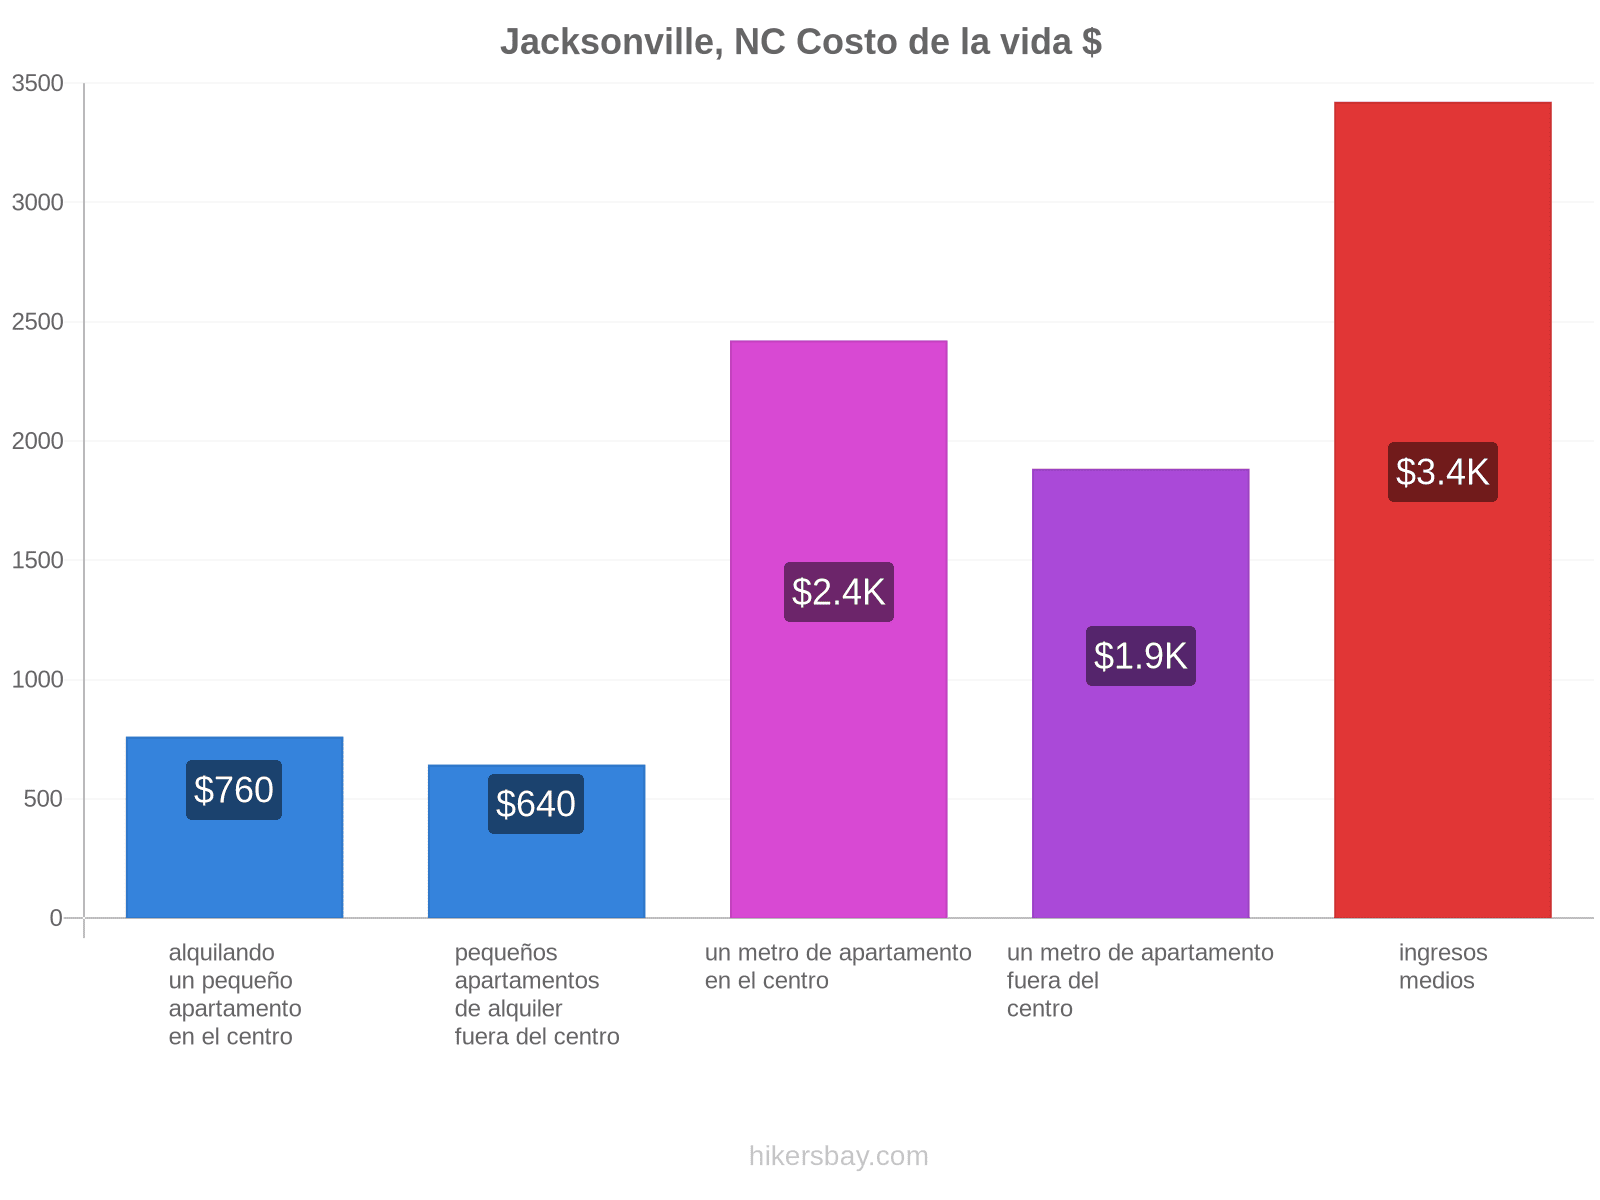 Jacksonville, NC costo de la vida hikersbay.com